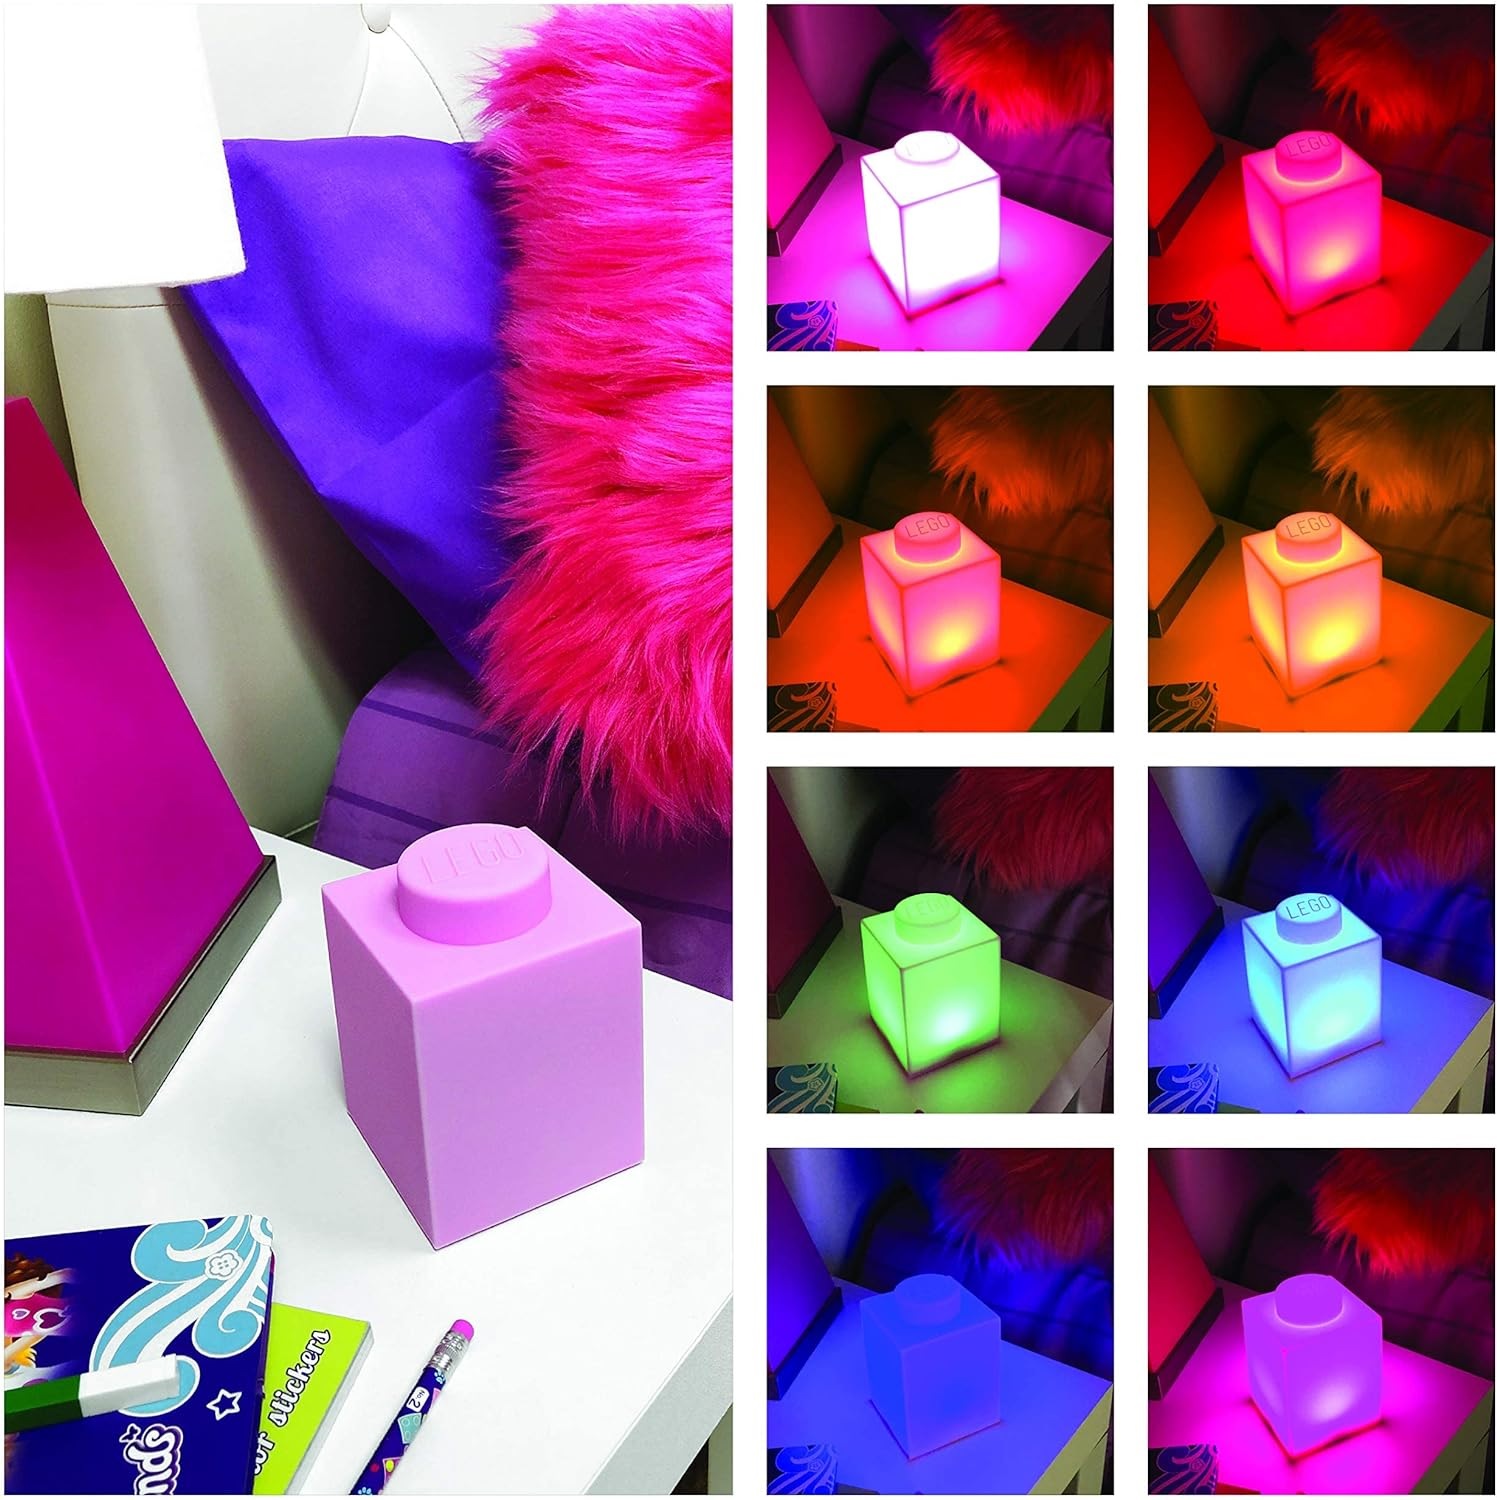 Luz de presença LED LEGO cor de rosa - 4895028525545